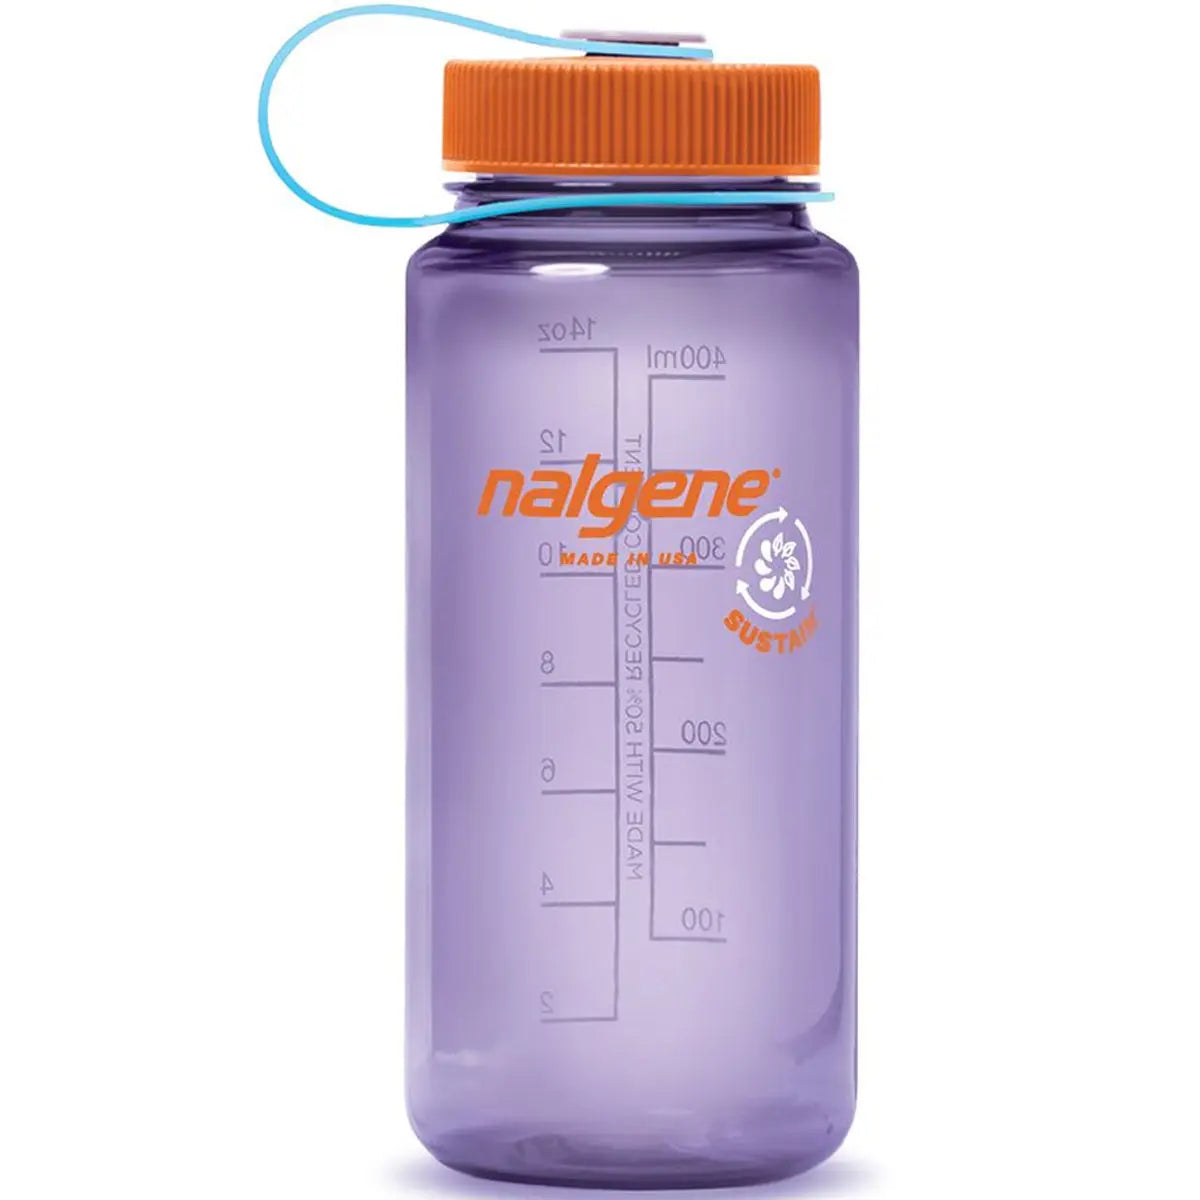 Nalgene Sustain 16 oz. Wide Mouth Water Bottle Nalgene